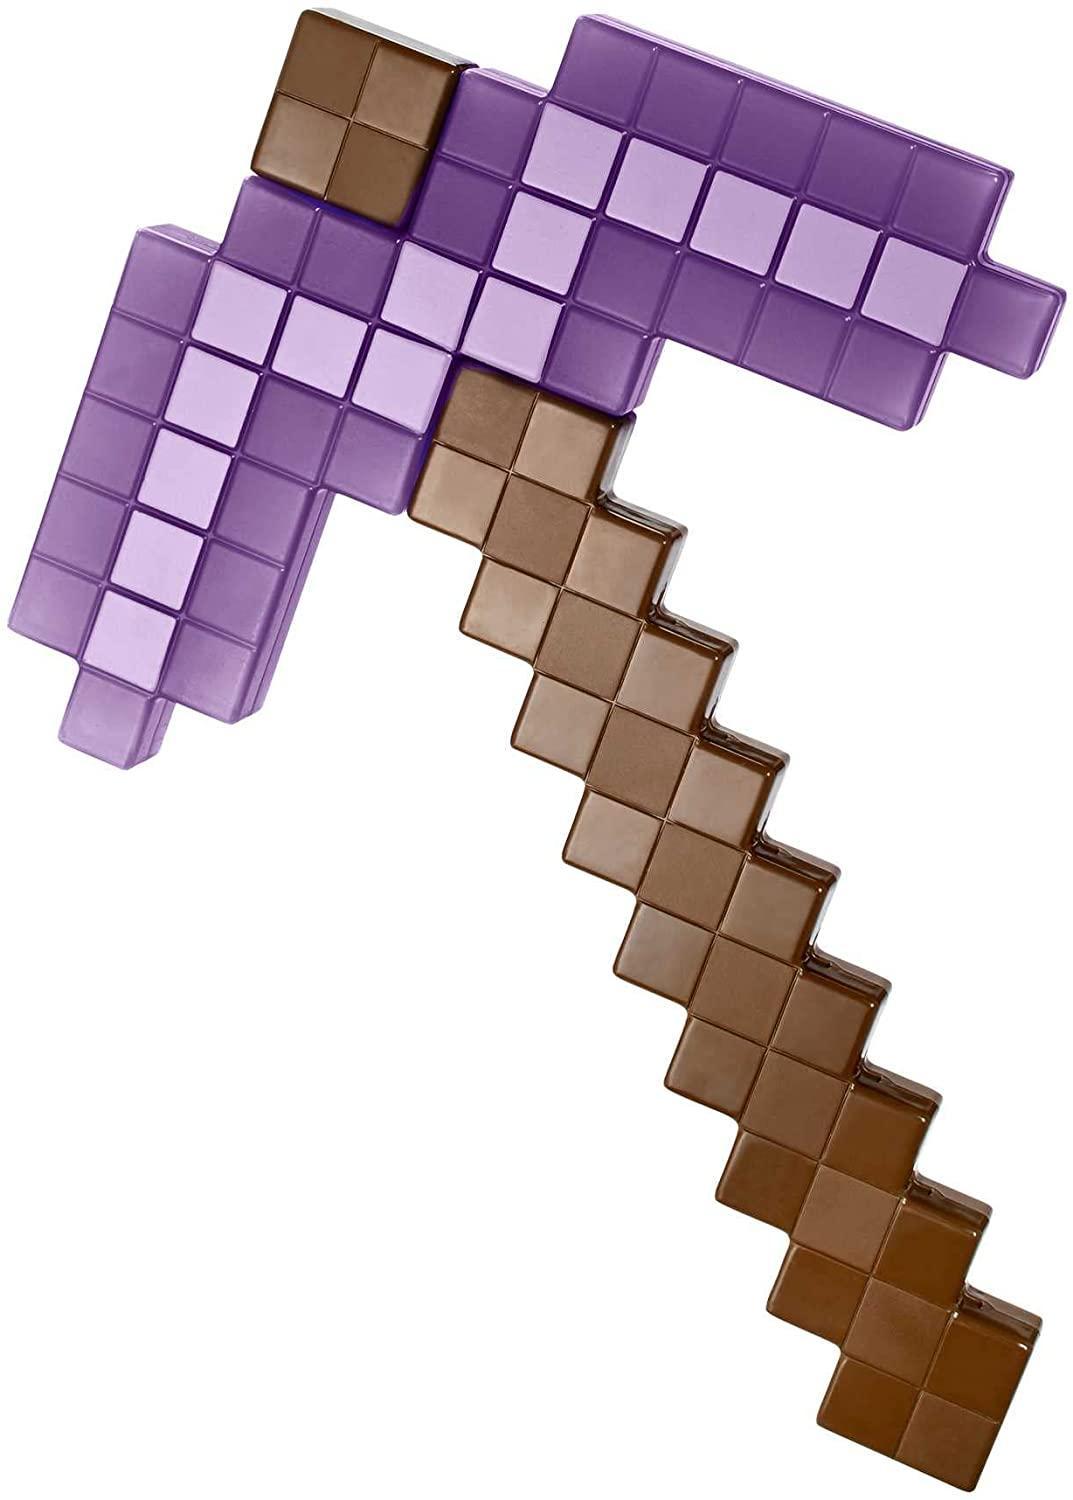 Puzzleparty minecraft piccone viola